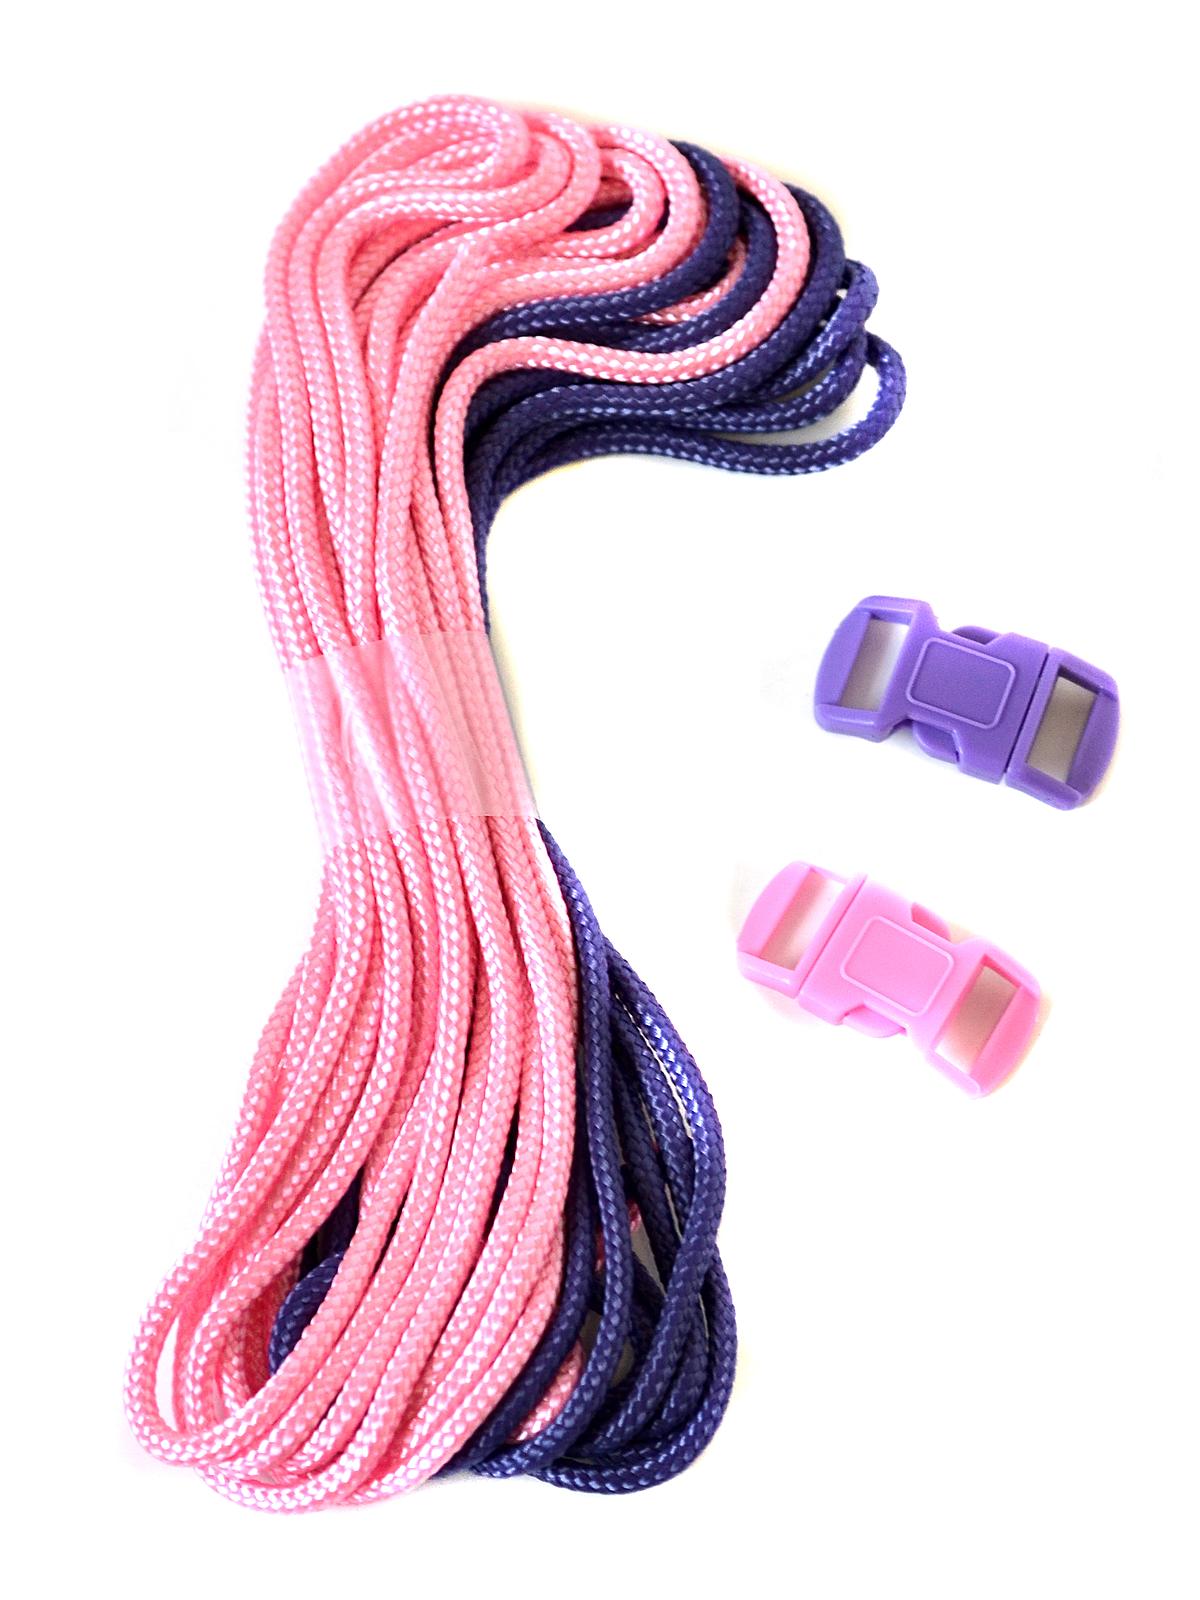 Parachute Cord Friendship Bracelet Kits Pink Purple